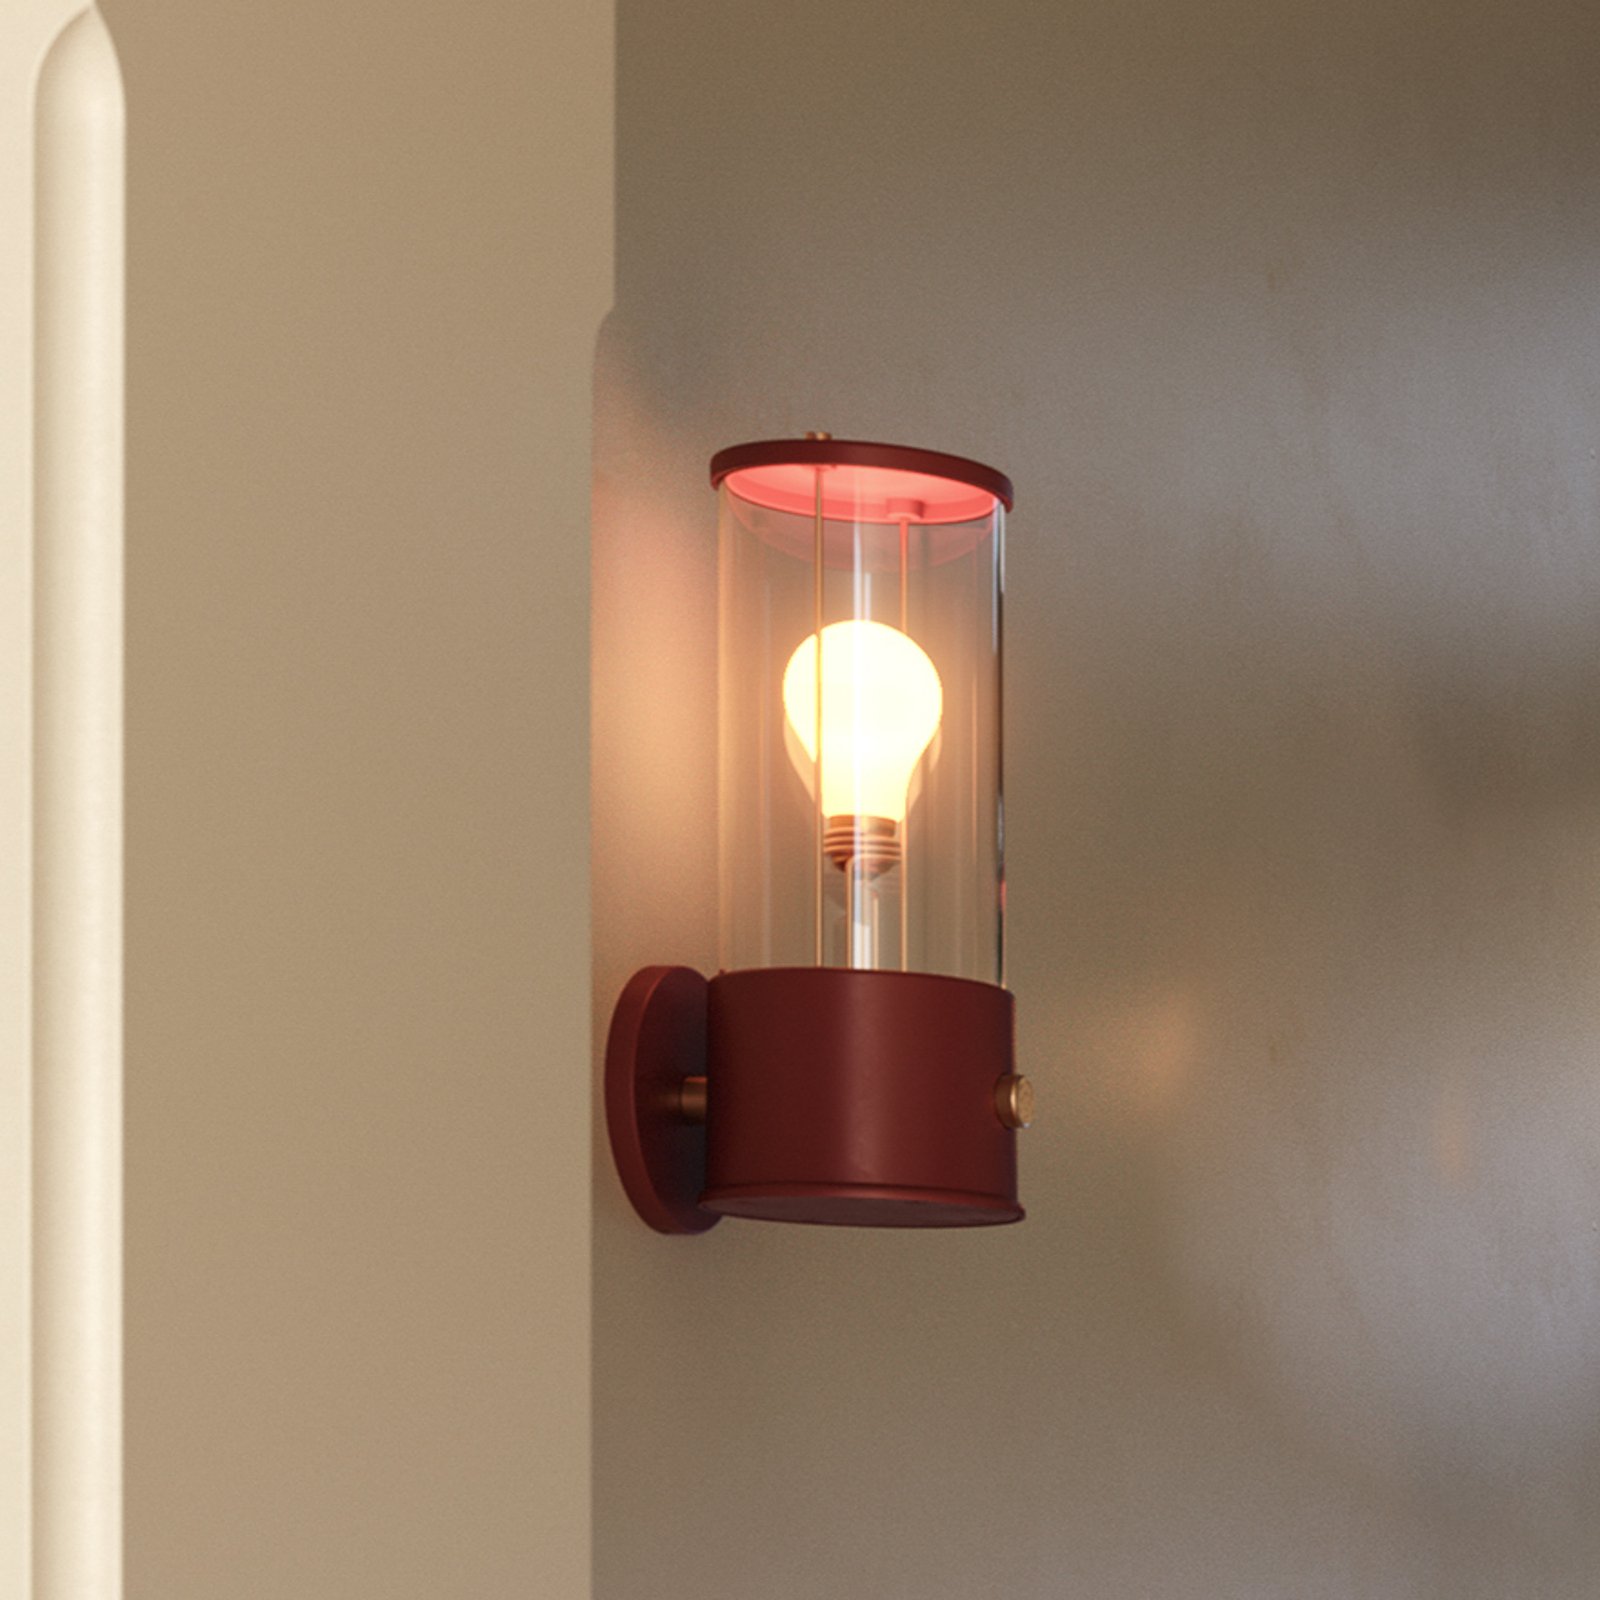 Tala sienas lampa Muse Portable, LED lampa E27, sarkana